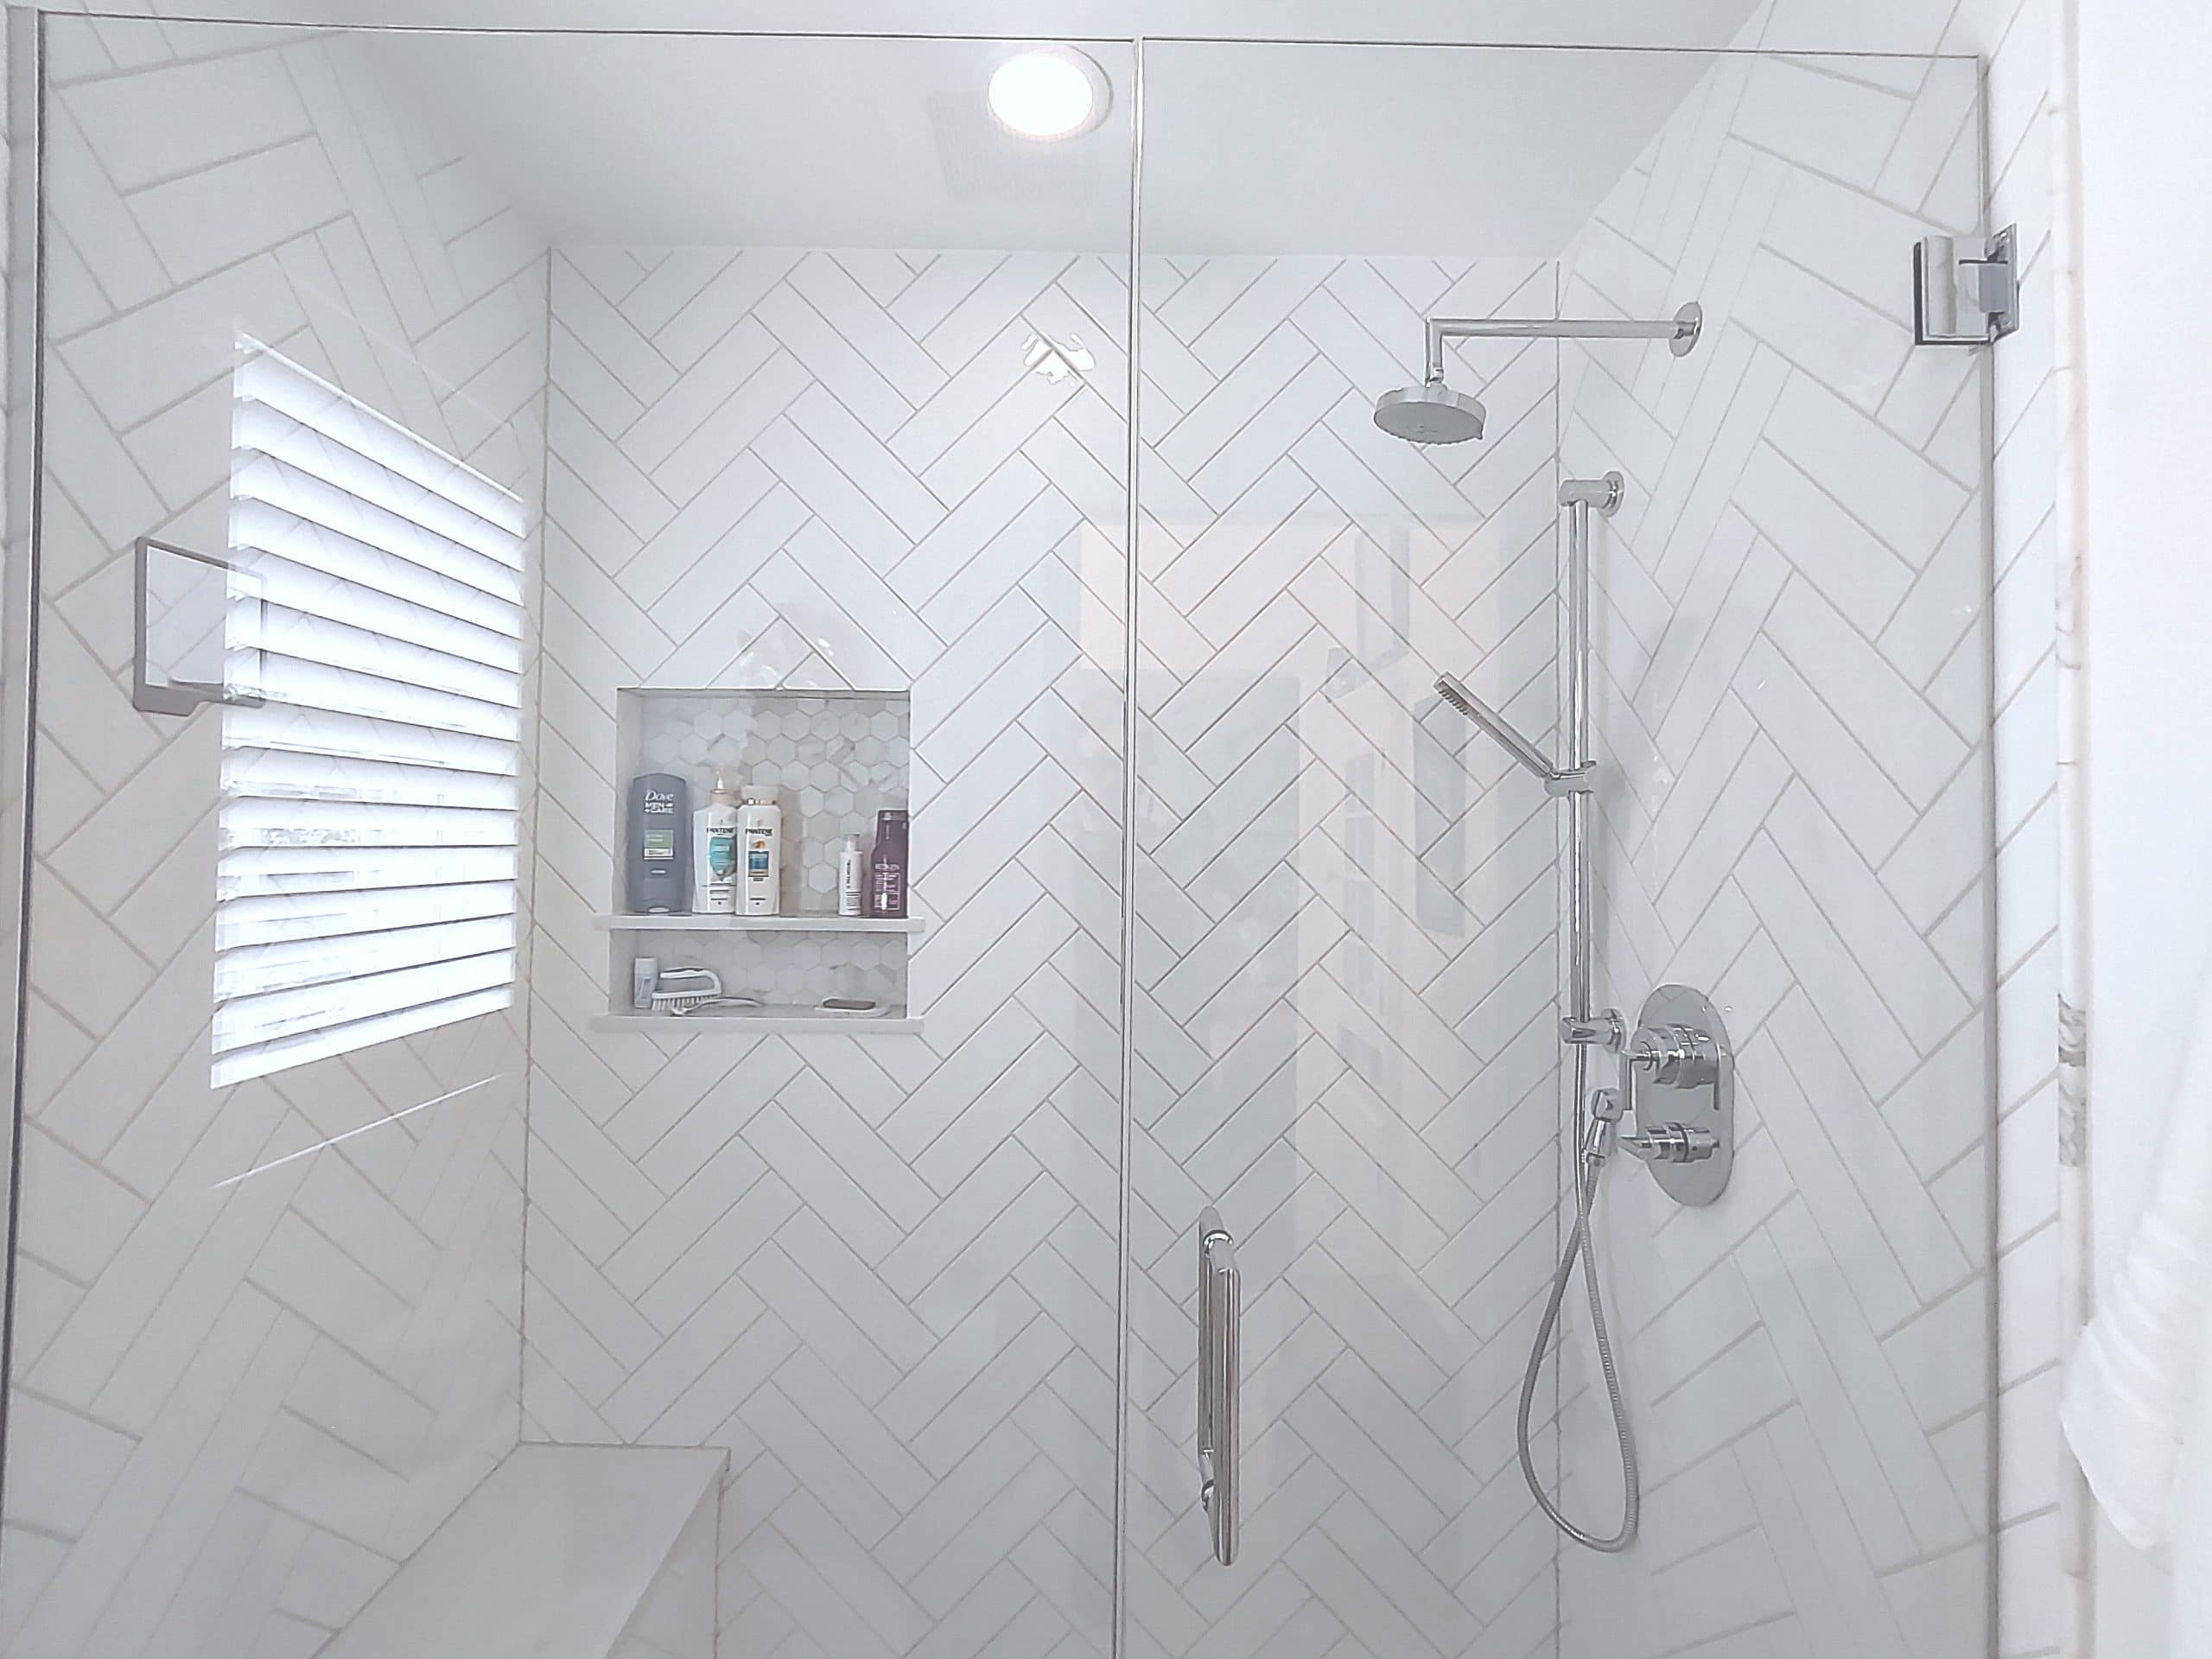 Walk-in shower with double herringbone tile walls